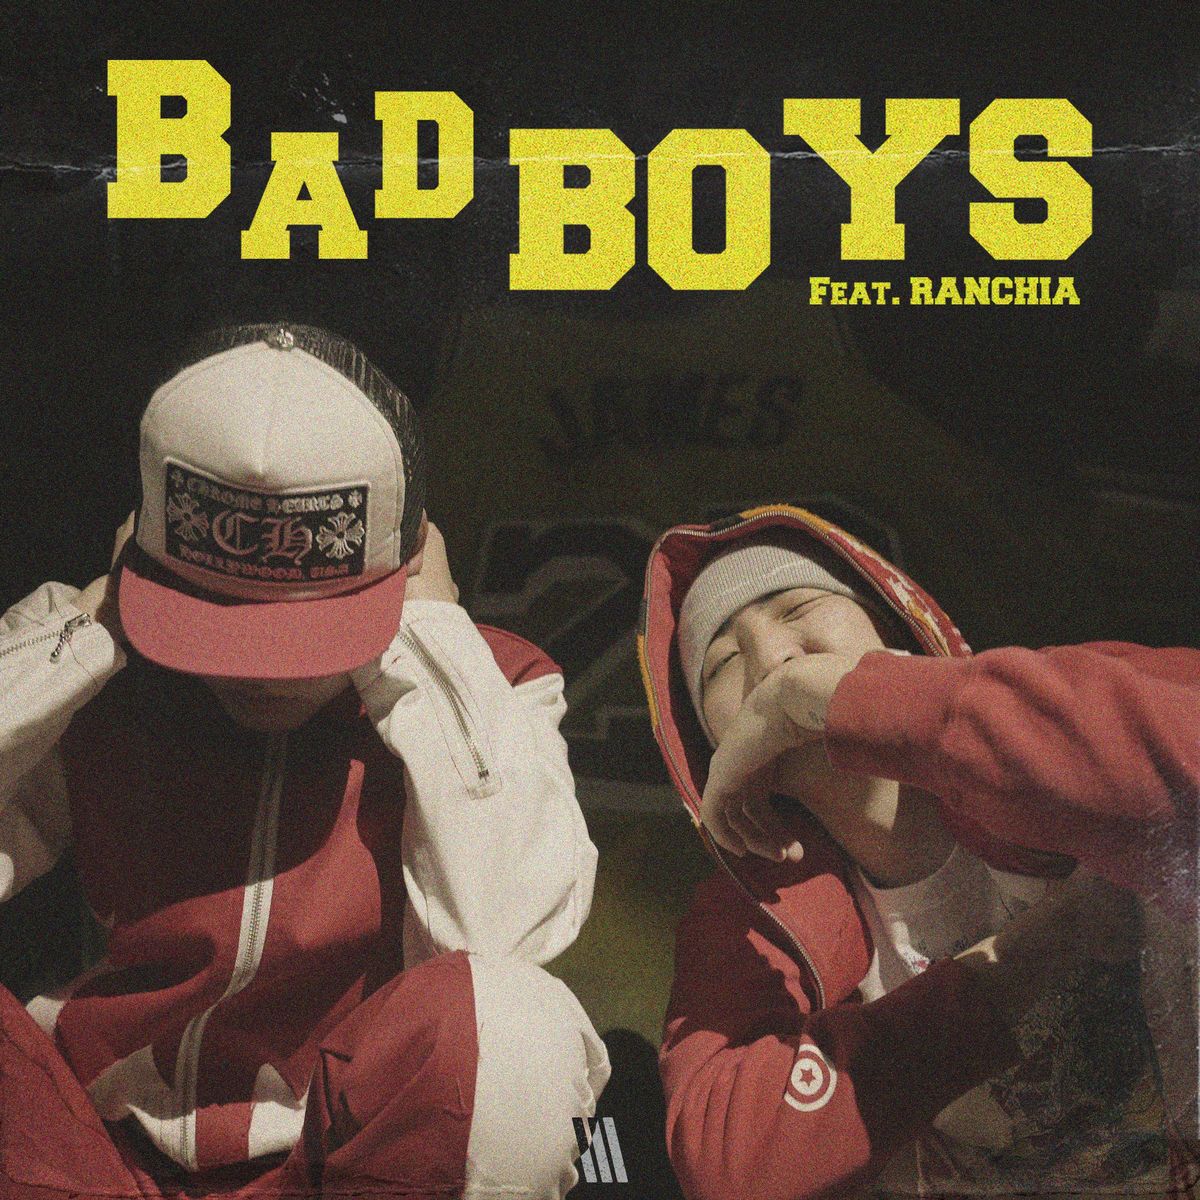 Seshin & M3CHVNIC – Bad boys (feat. RANCHIA) – Single